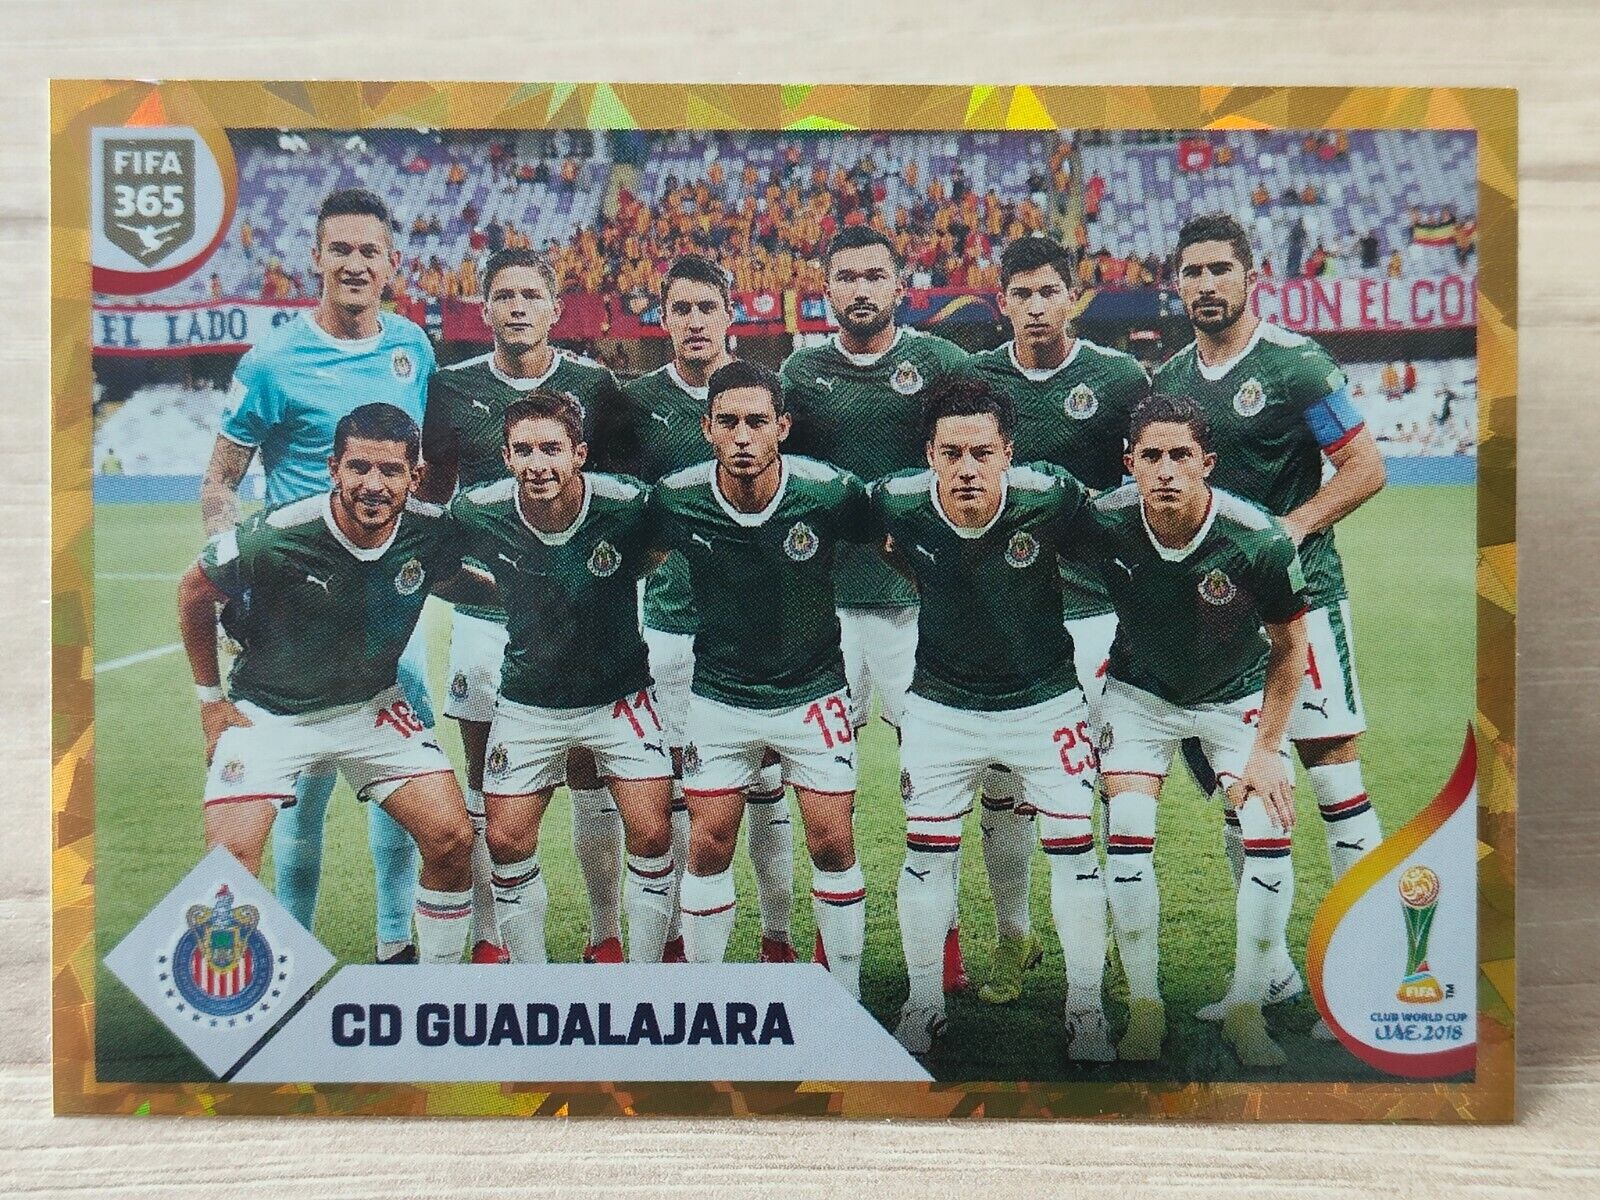 2020 Panini C137 FIFA 365 Sticker - Team CD Guadalajara #444